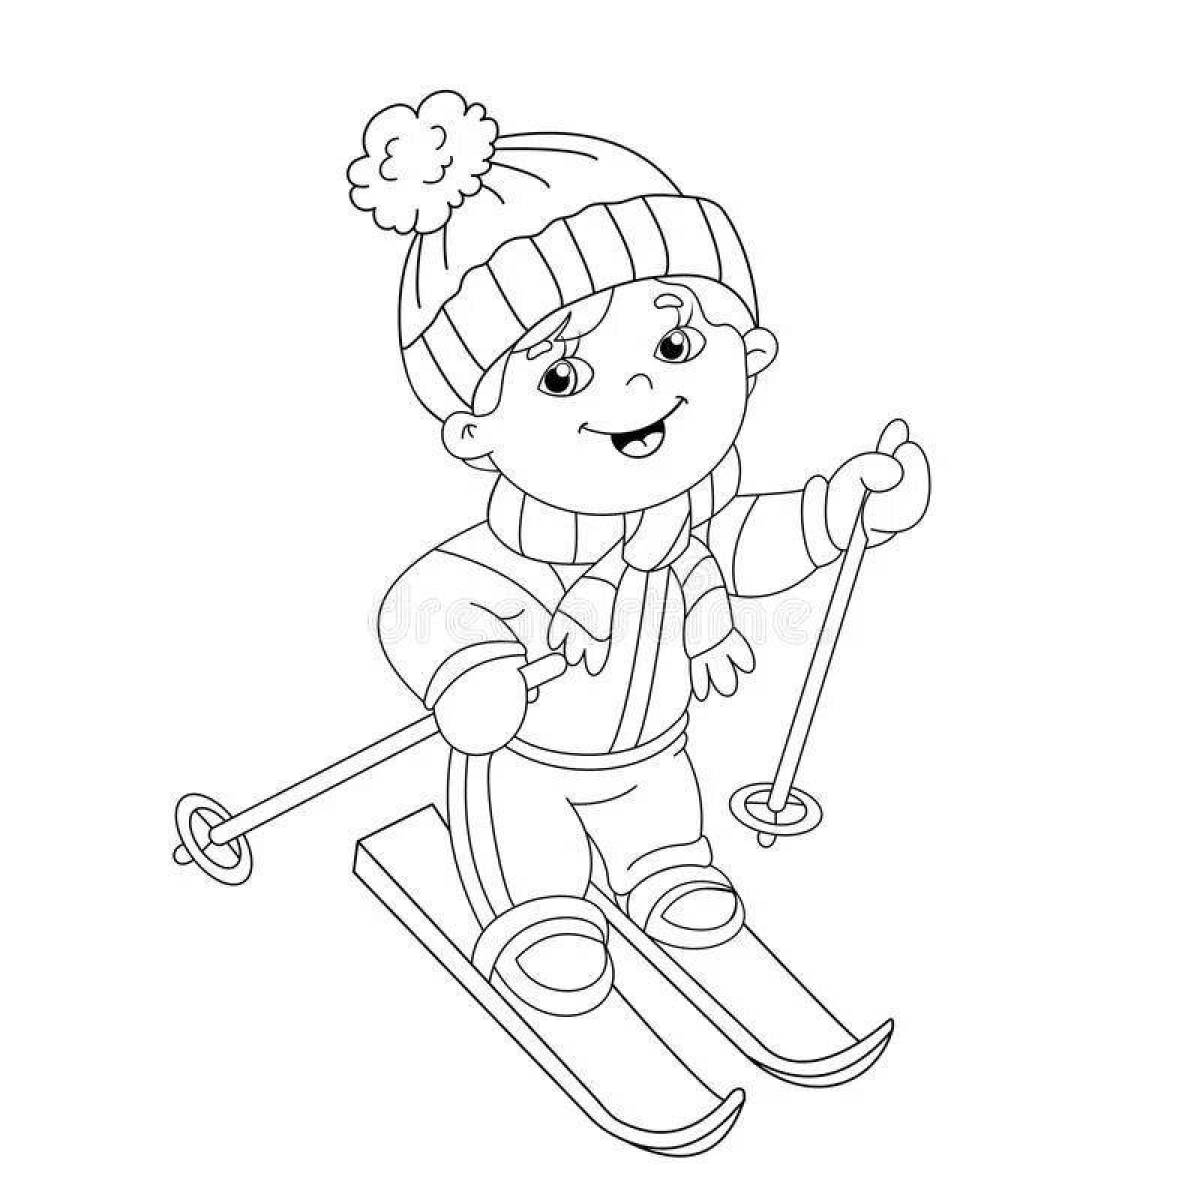 Rampant skier coloring page